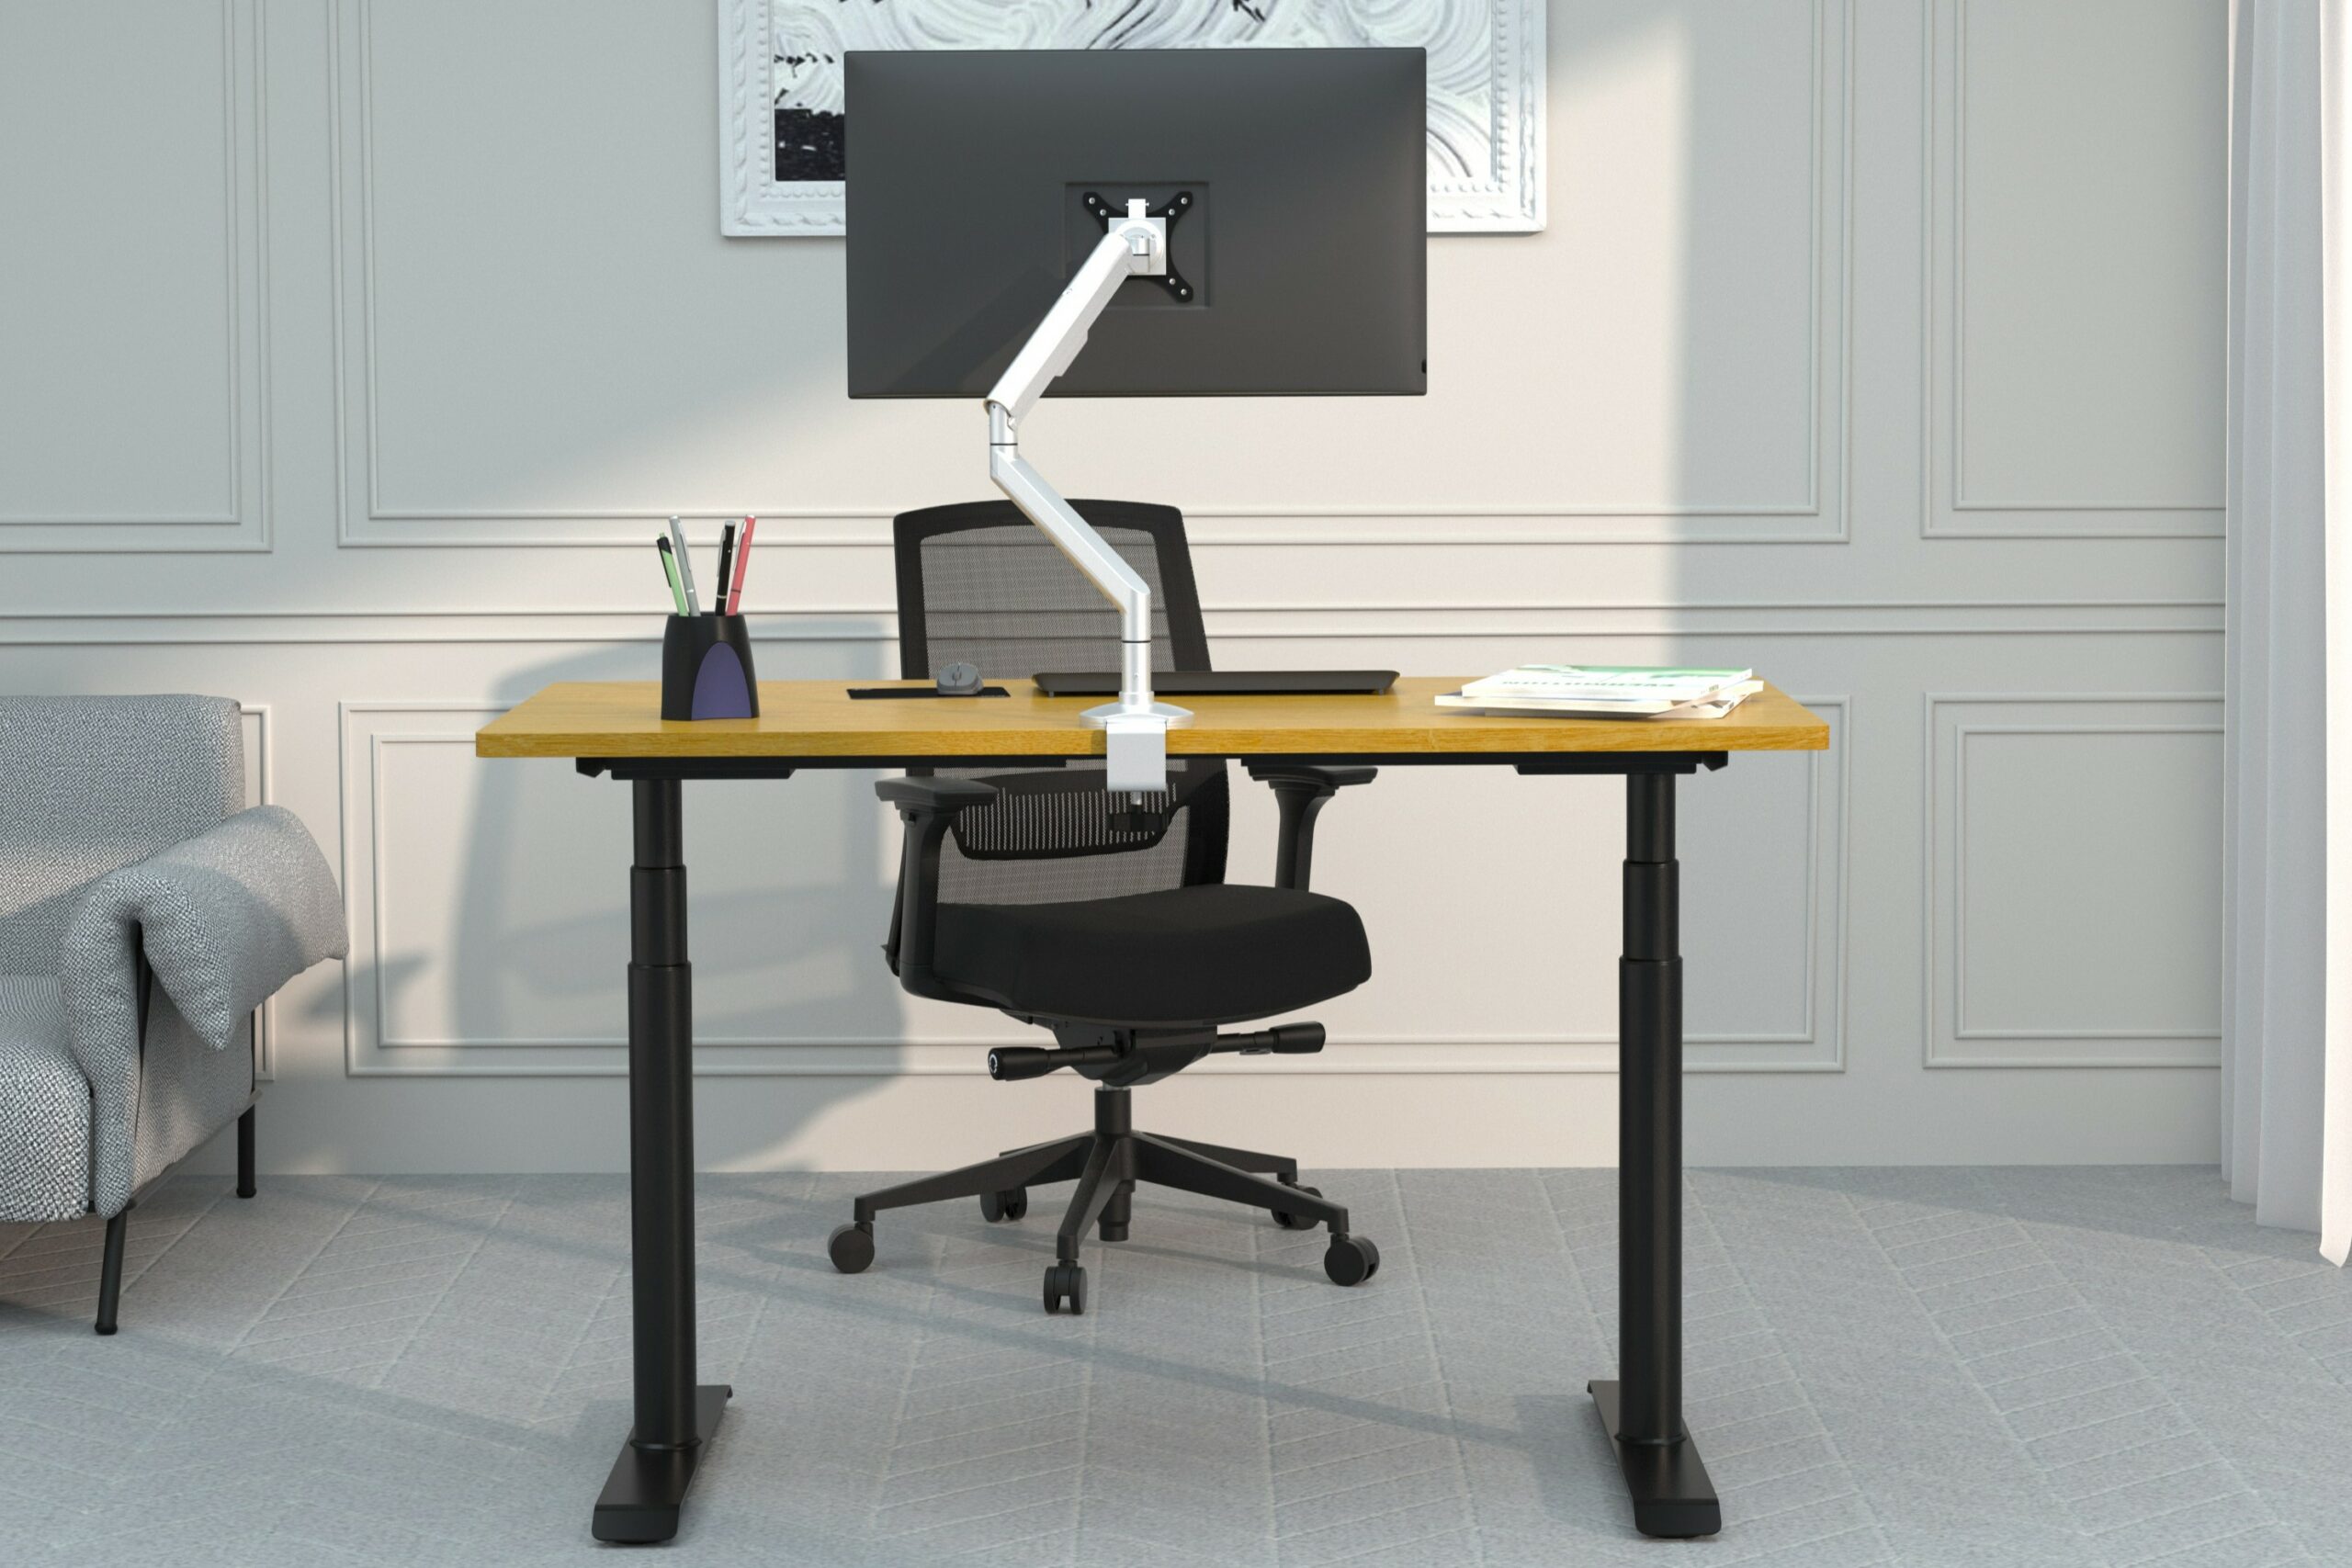 single monitor arm desk mount application